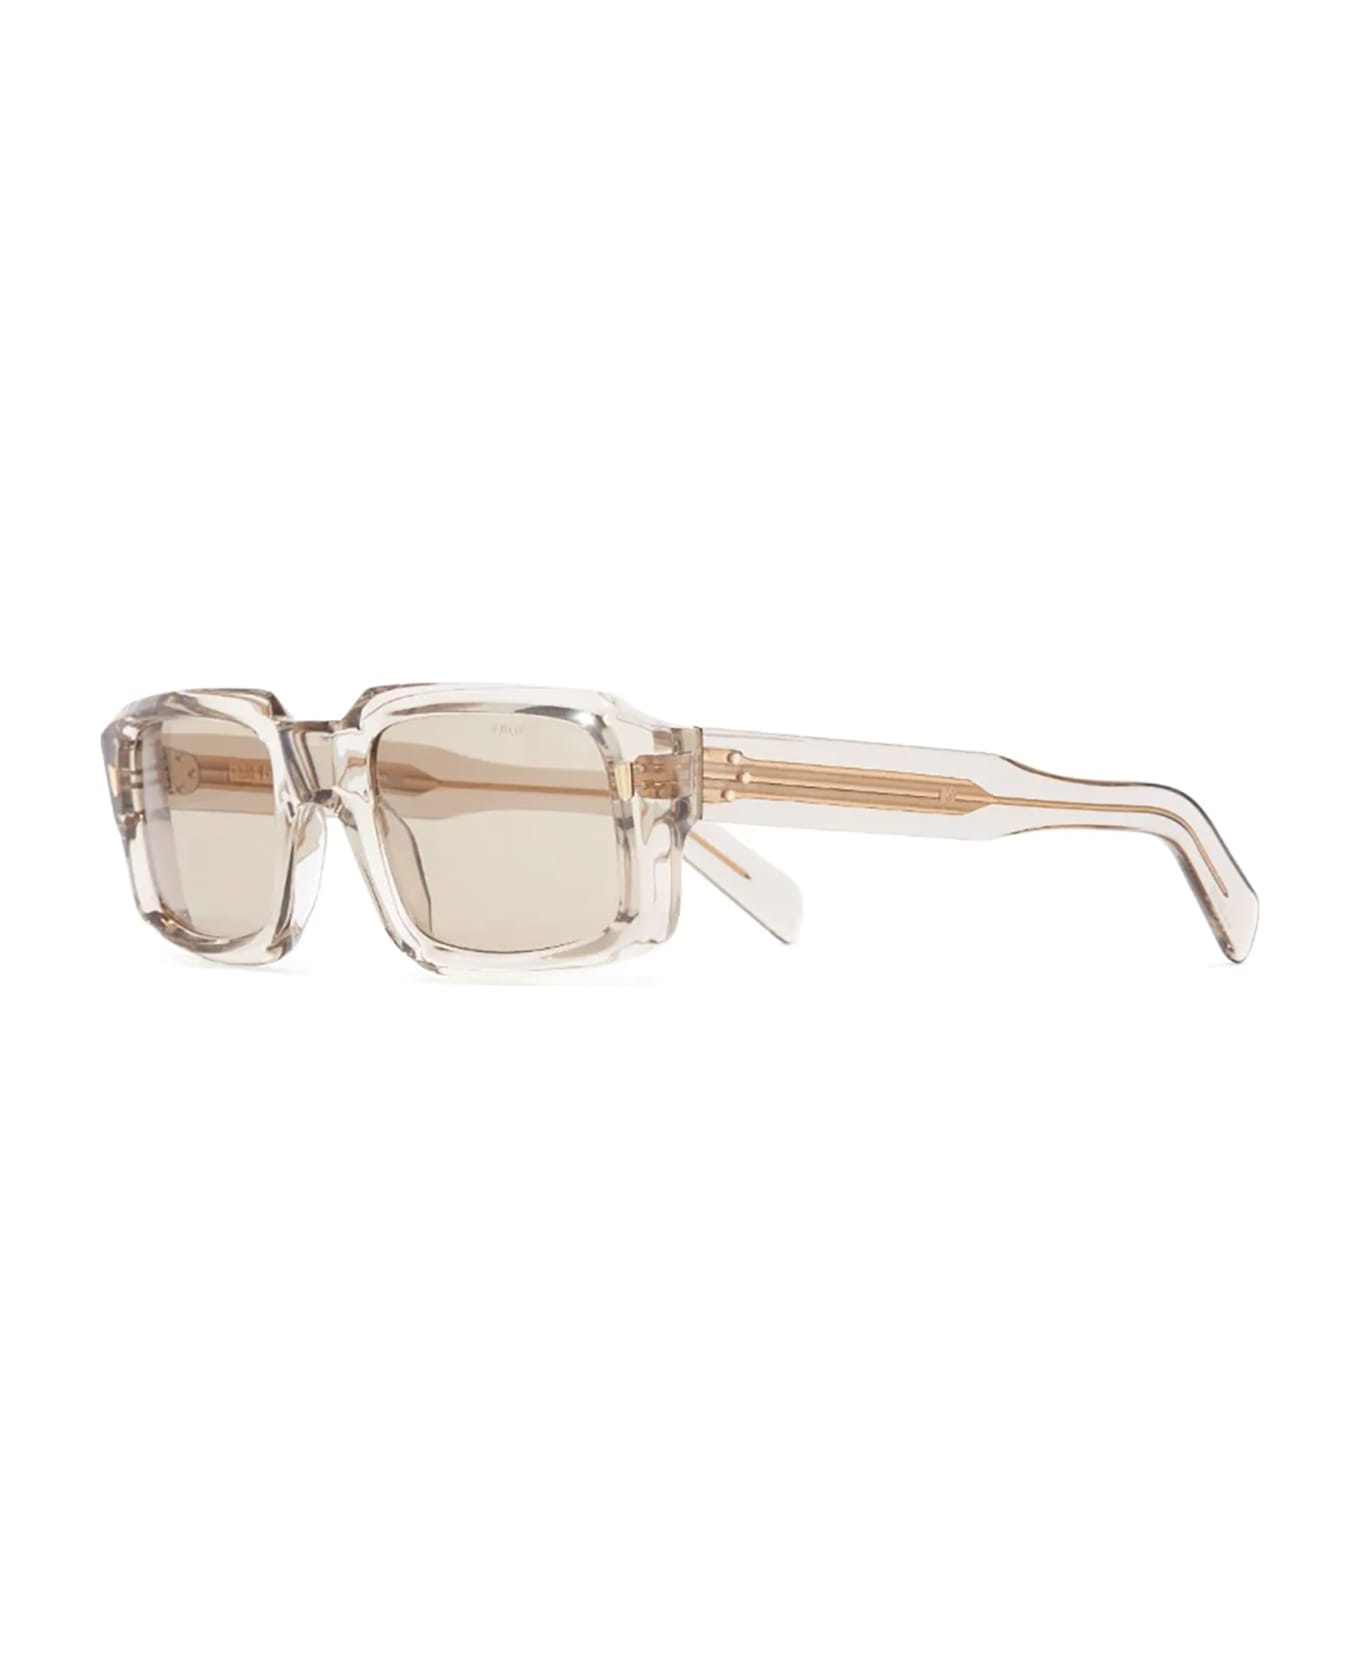 Cutler and Gross 9495 Sunglasses - Sand Crystal